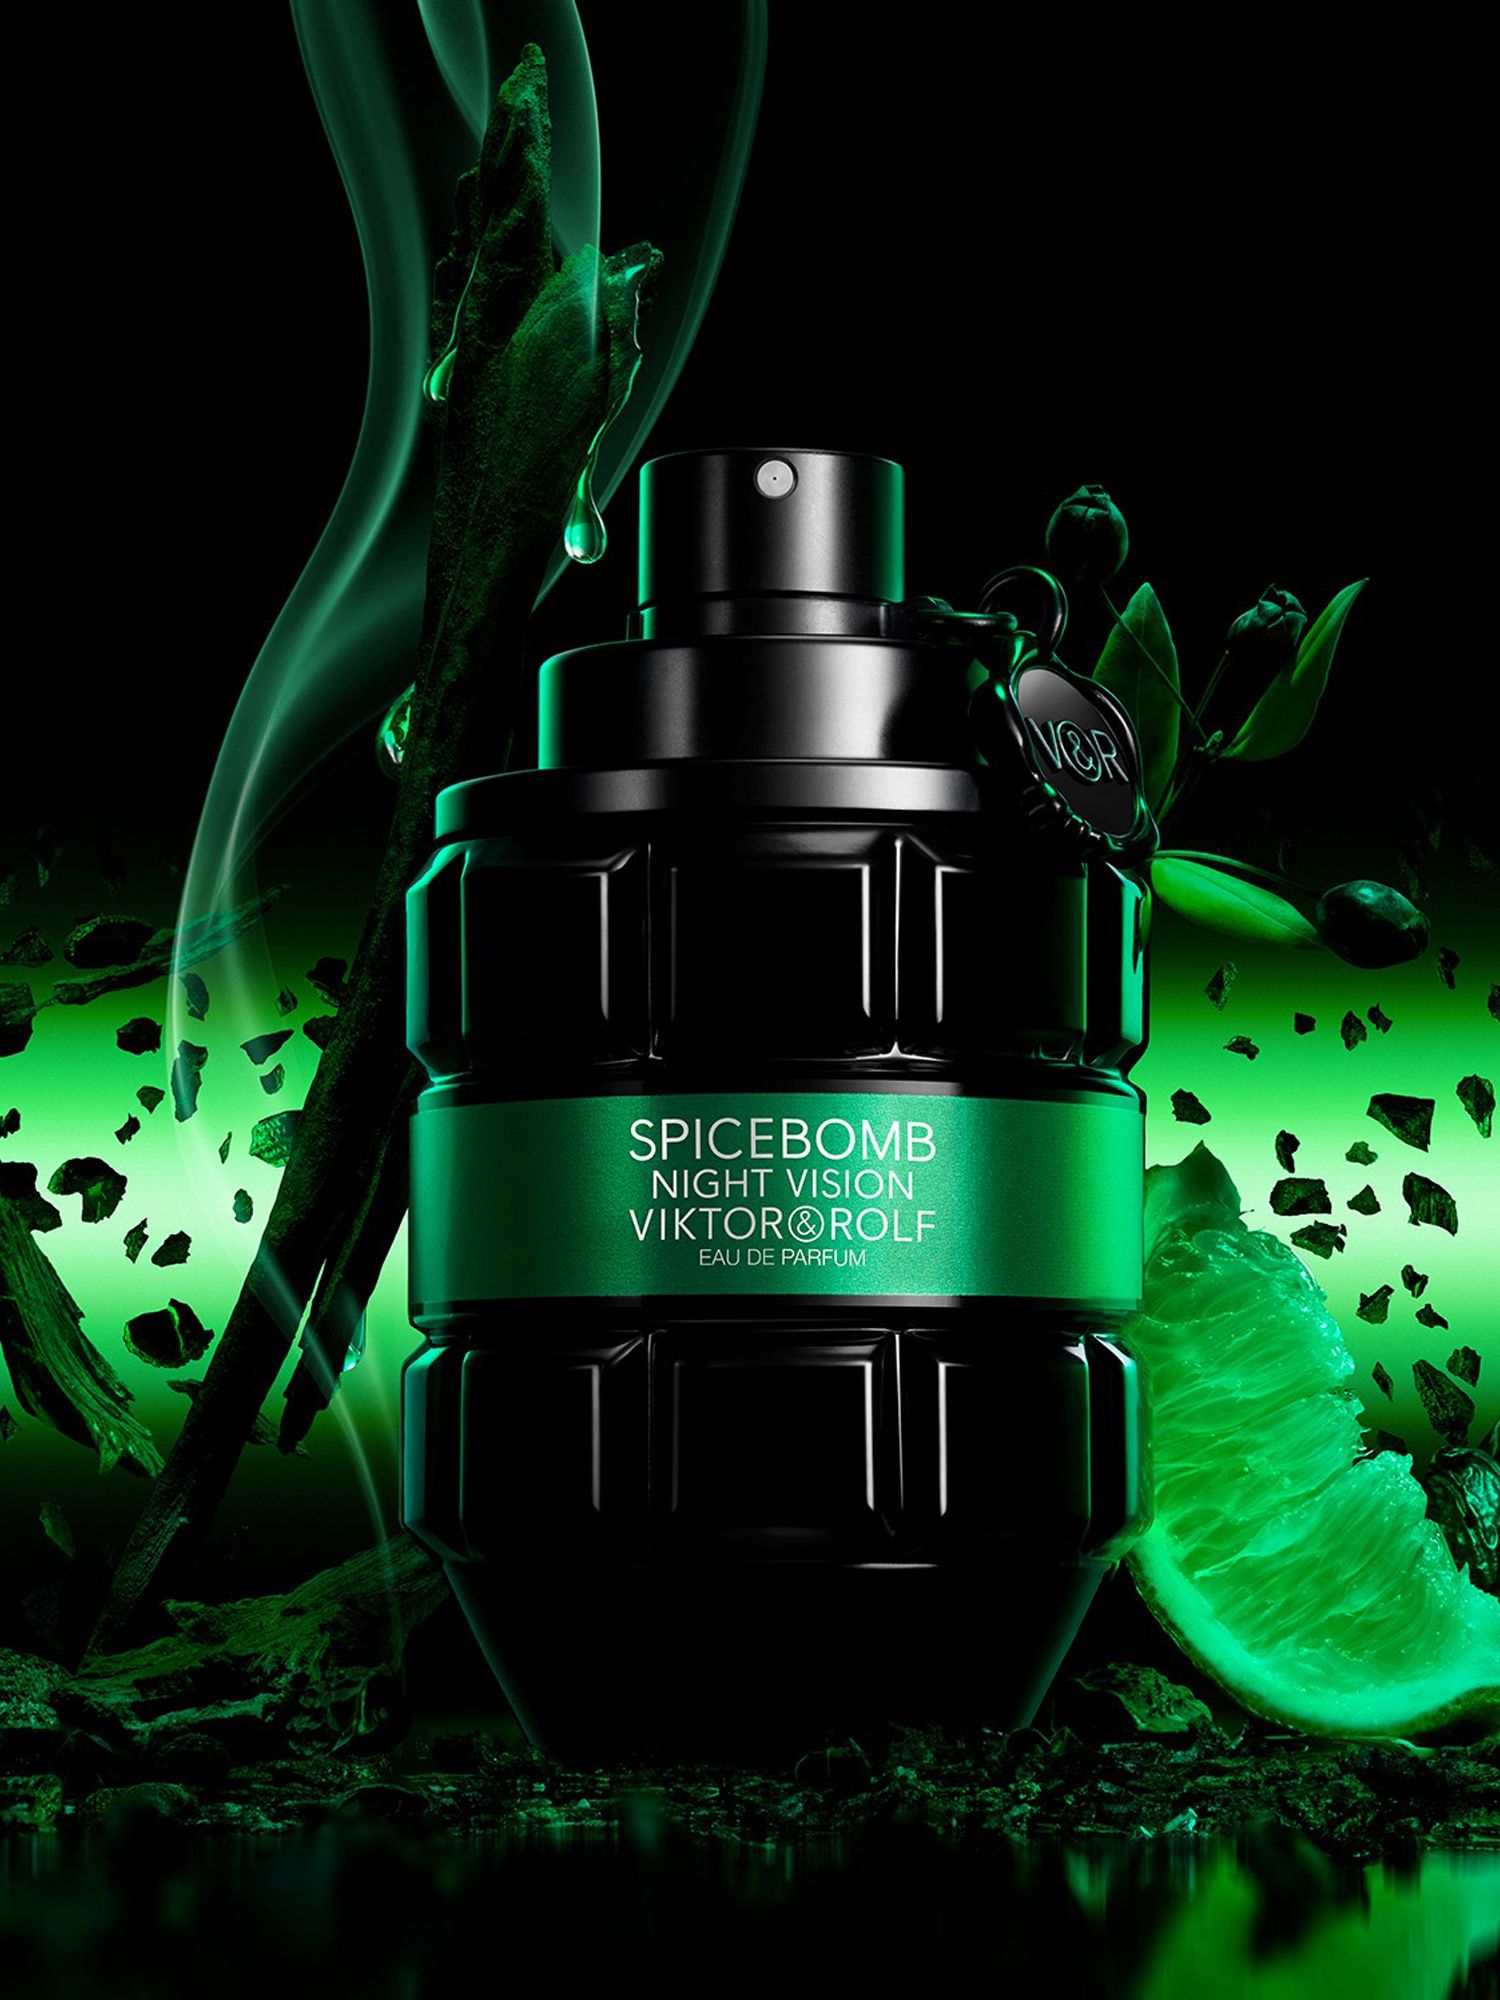 Viktor & Rolf Spicebomb Night Vision Eau de Parfum, 90ml at John Lewis ...